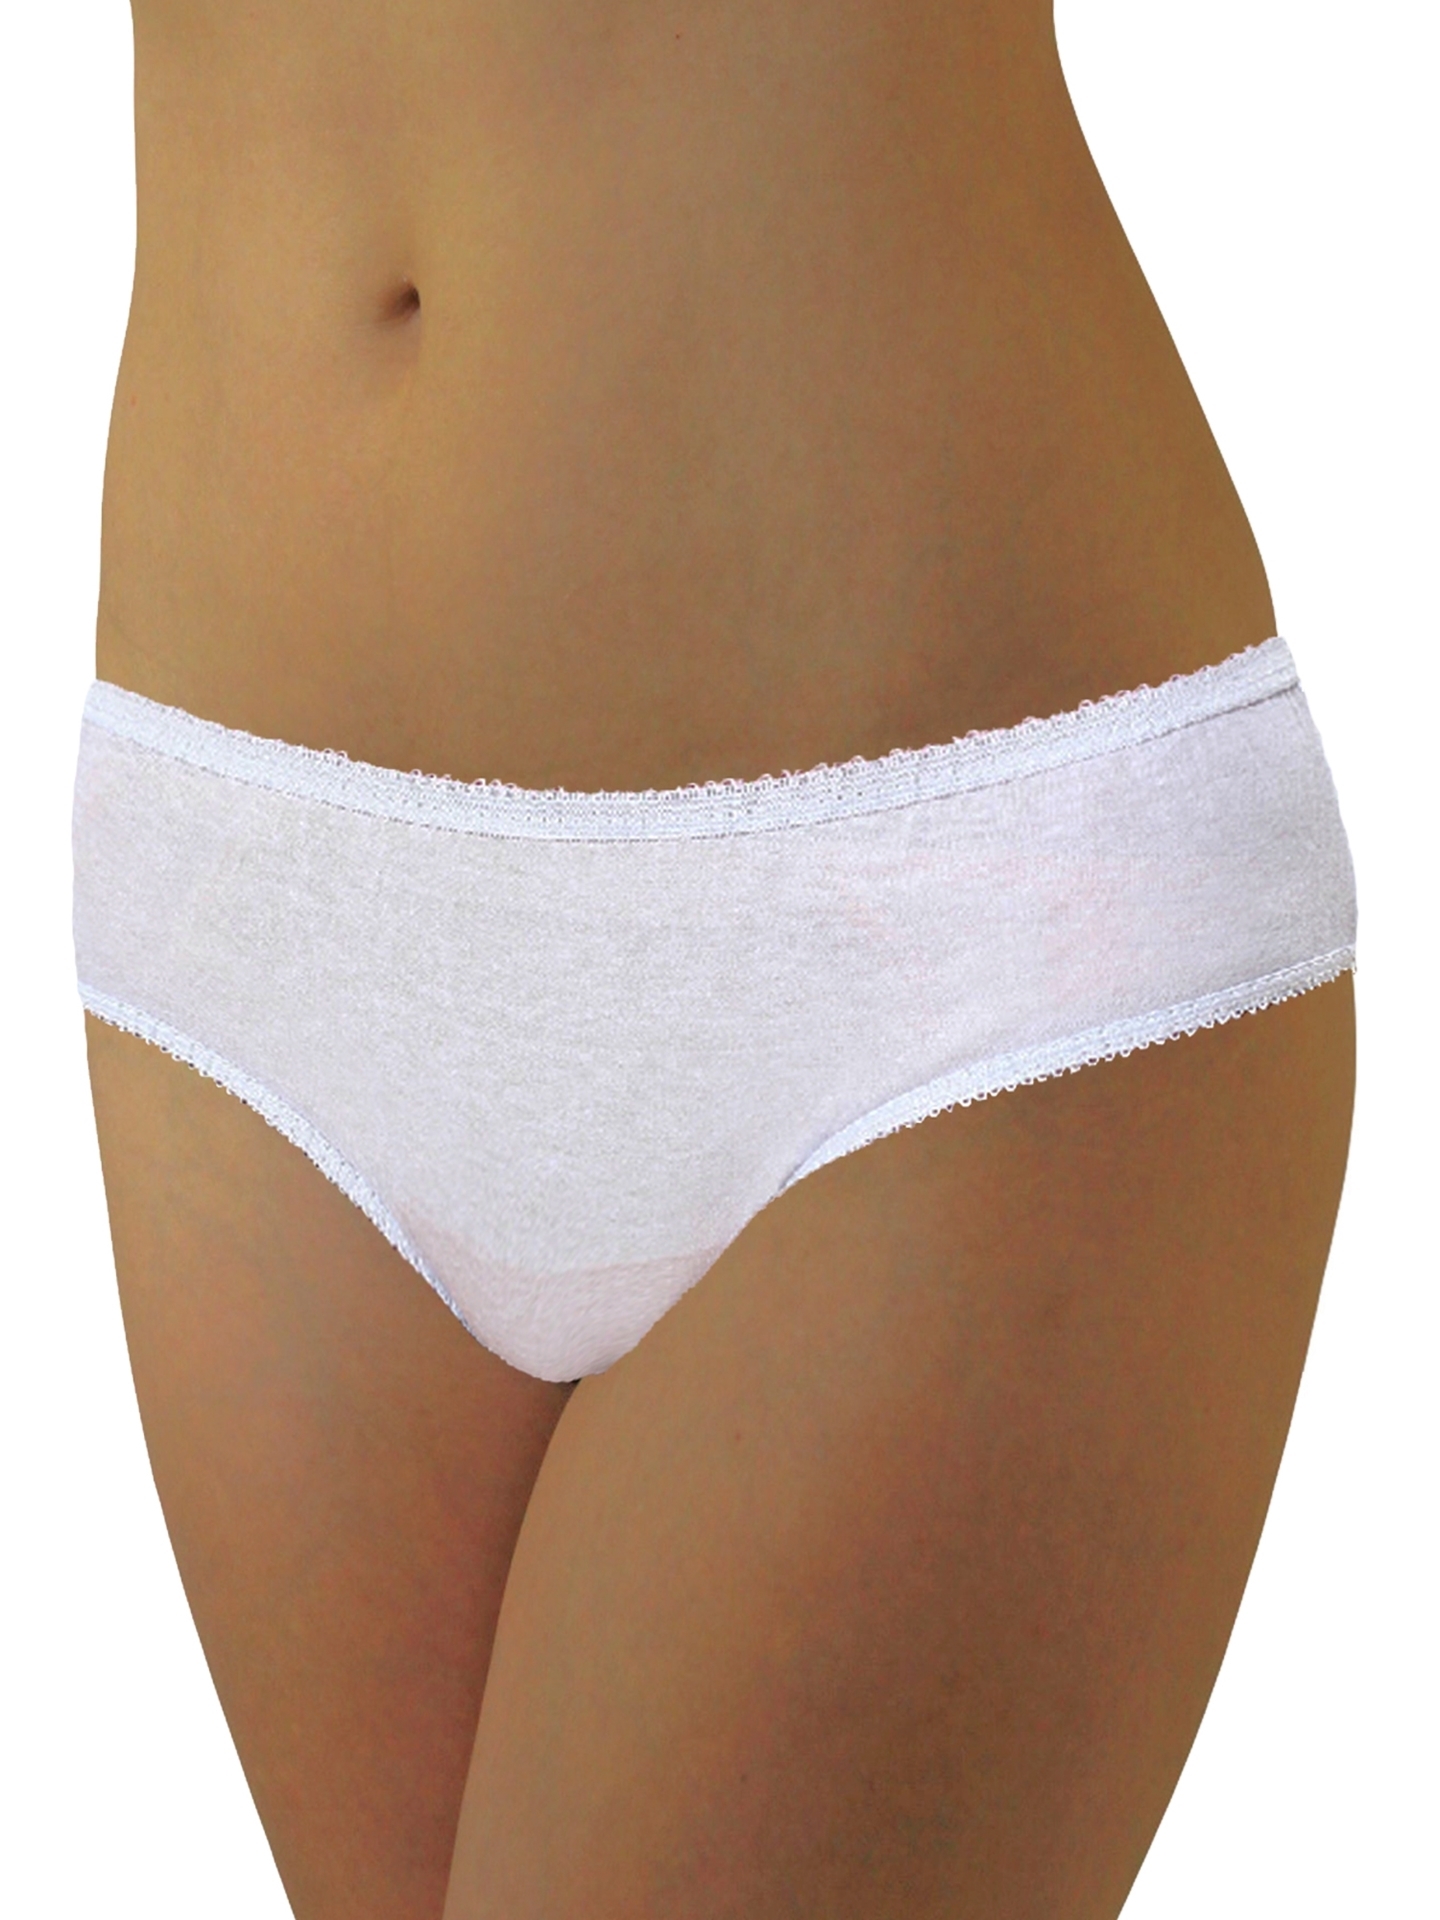 Womens Disposable 100% Cotton Underwear 10-Pack. Men Compression Shirts,  Girdles, Chest Binders, Hernia Garments